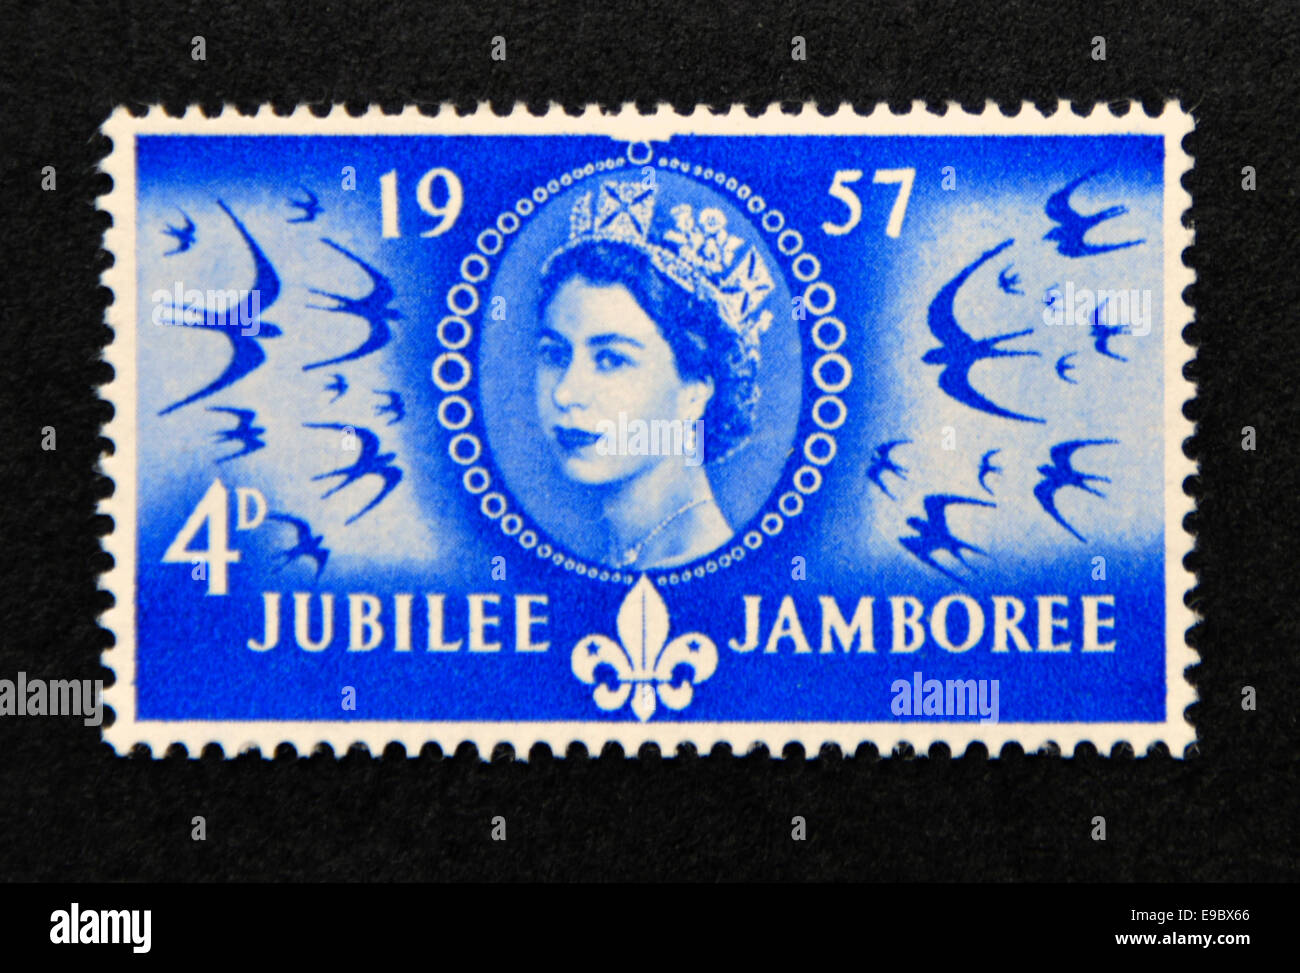 Postage stamp. Great Britain. Queen Elizabeth II. World Scout Jubillee Jamboree. 1957. Stock Photo